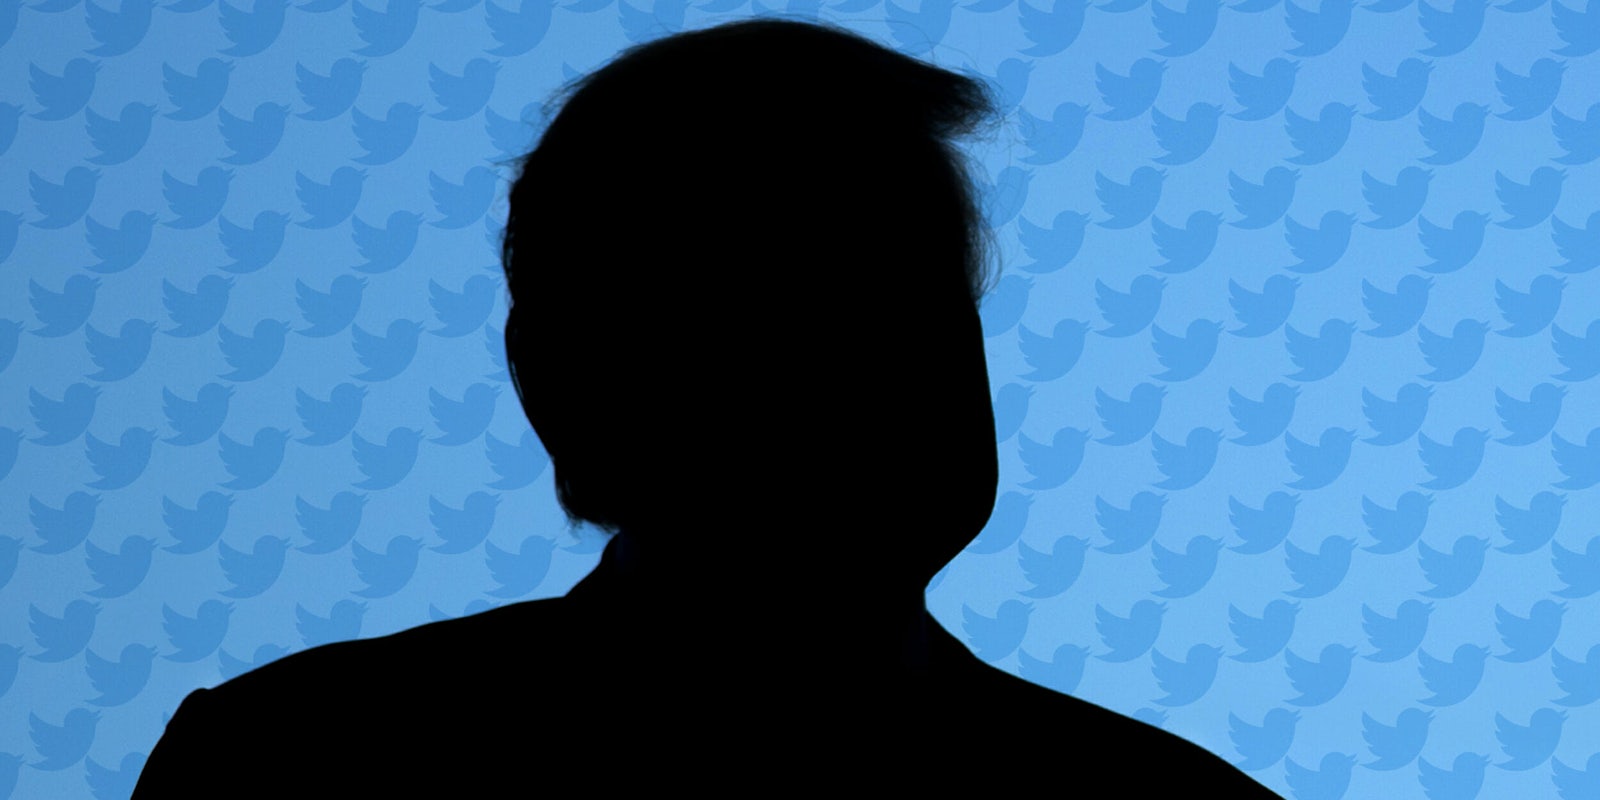 Donald Trump silhouette over Twitter logo pattern